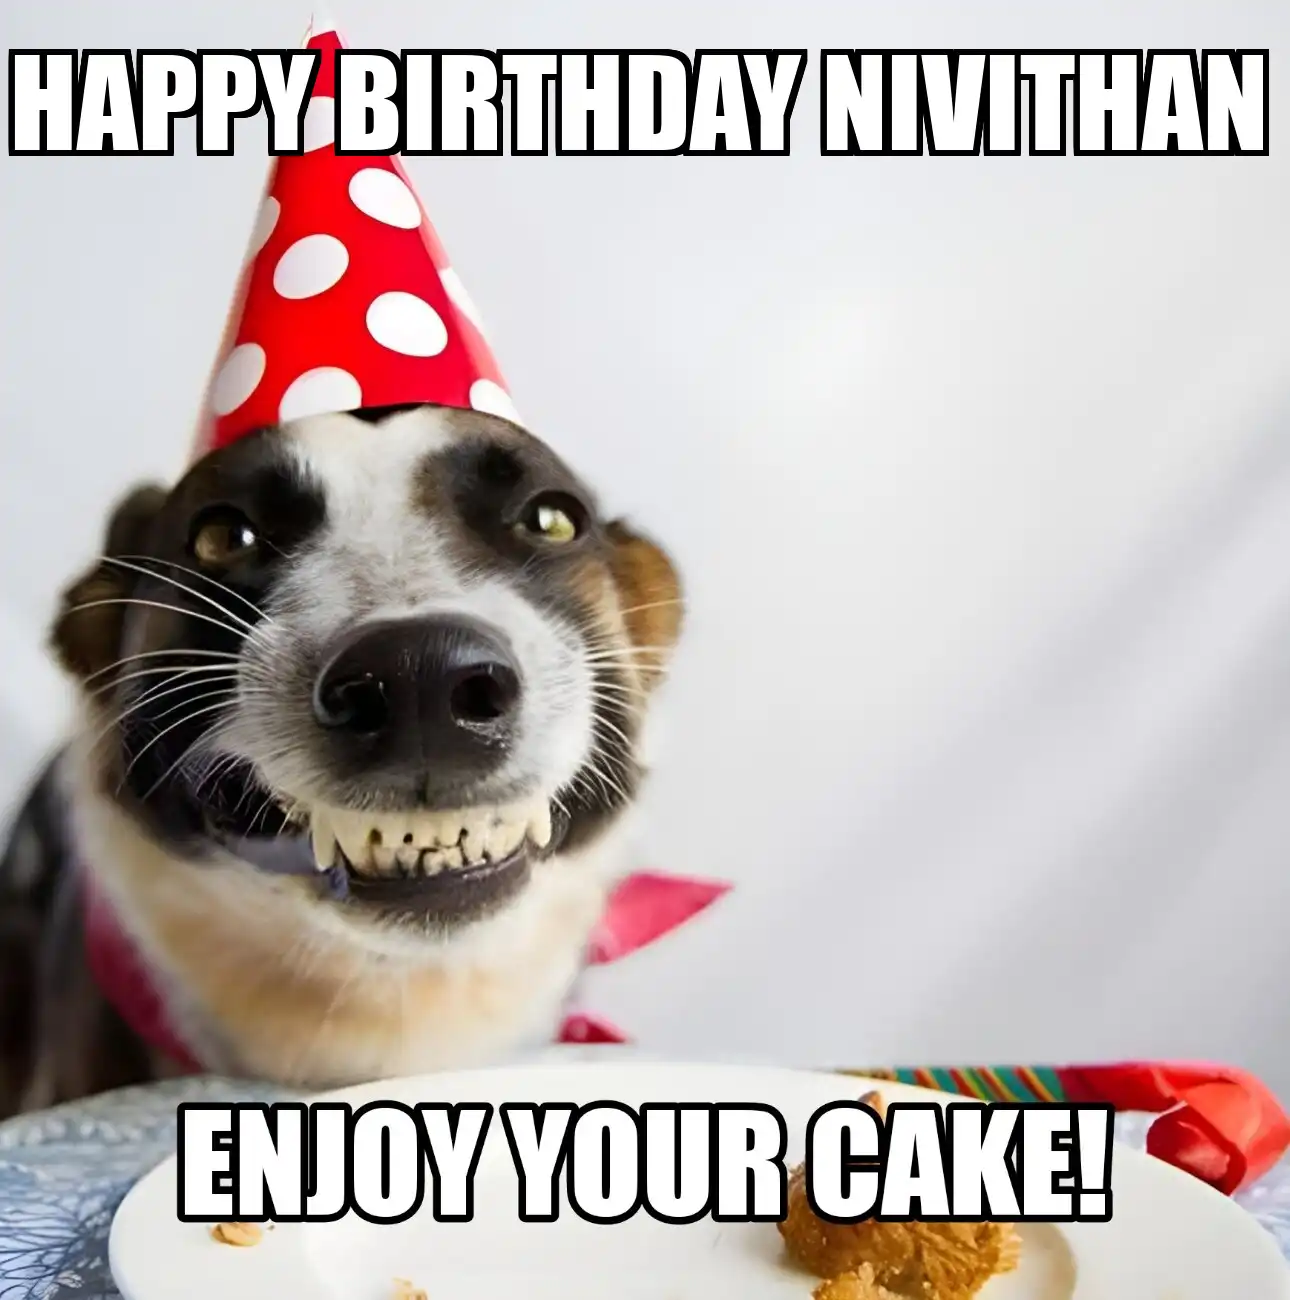 Happy Birthday Nivithan Enjoy Your Cake Dog Meme